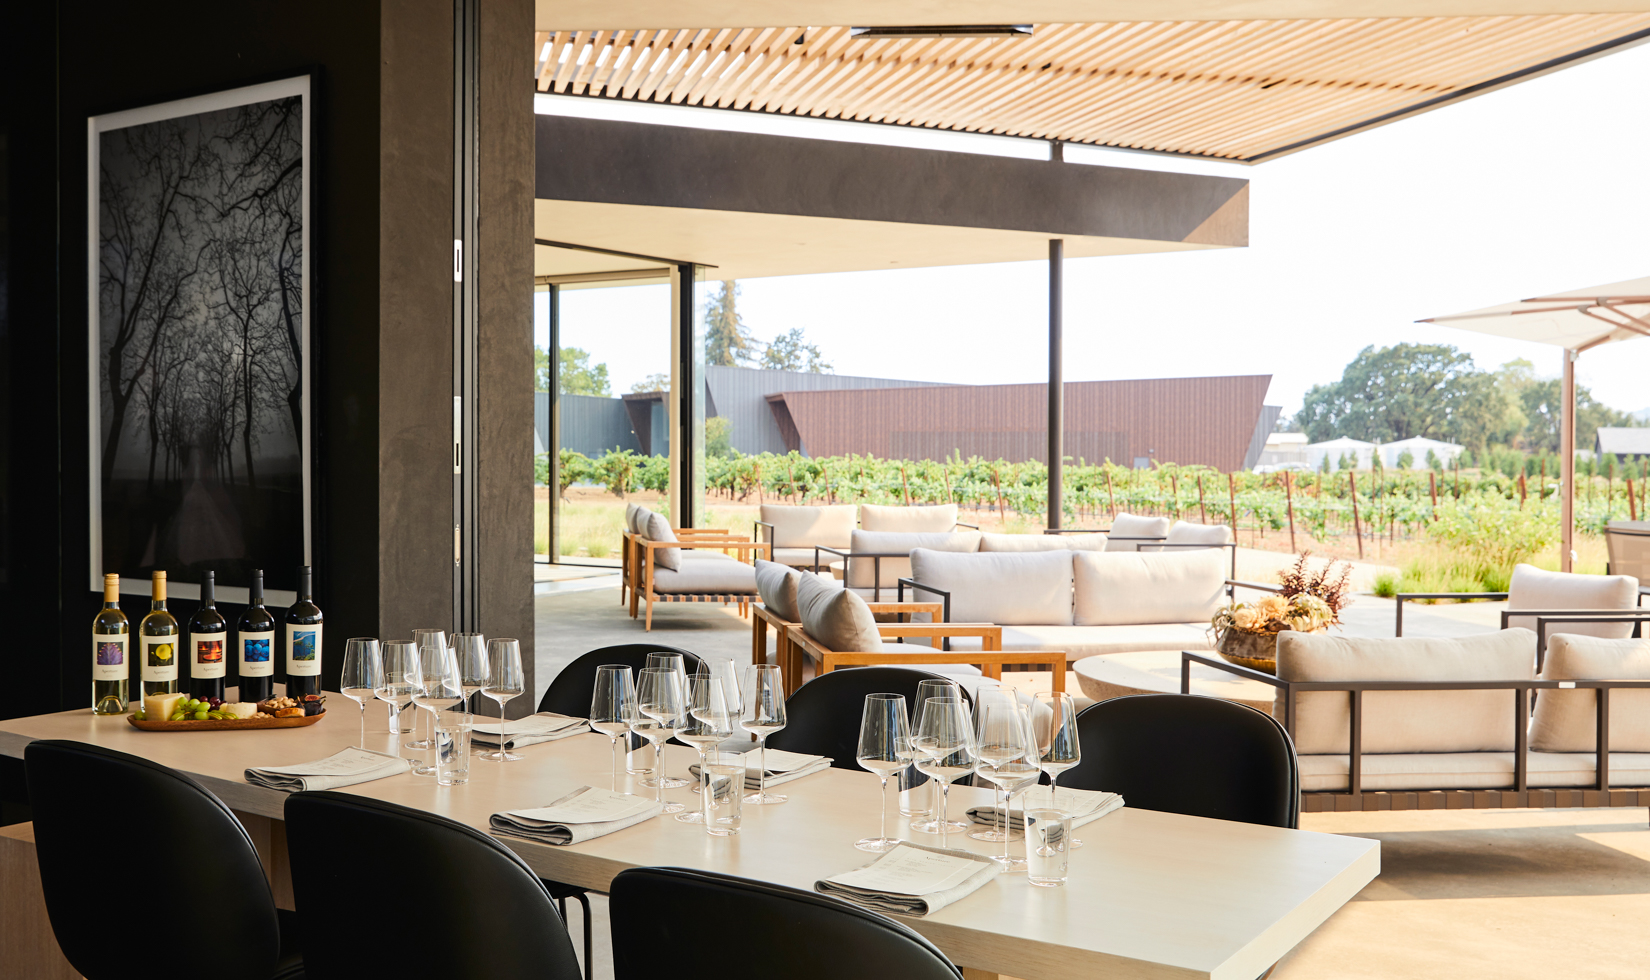 modern tasting room with wine glasses on wood table and vineyard views